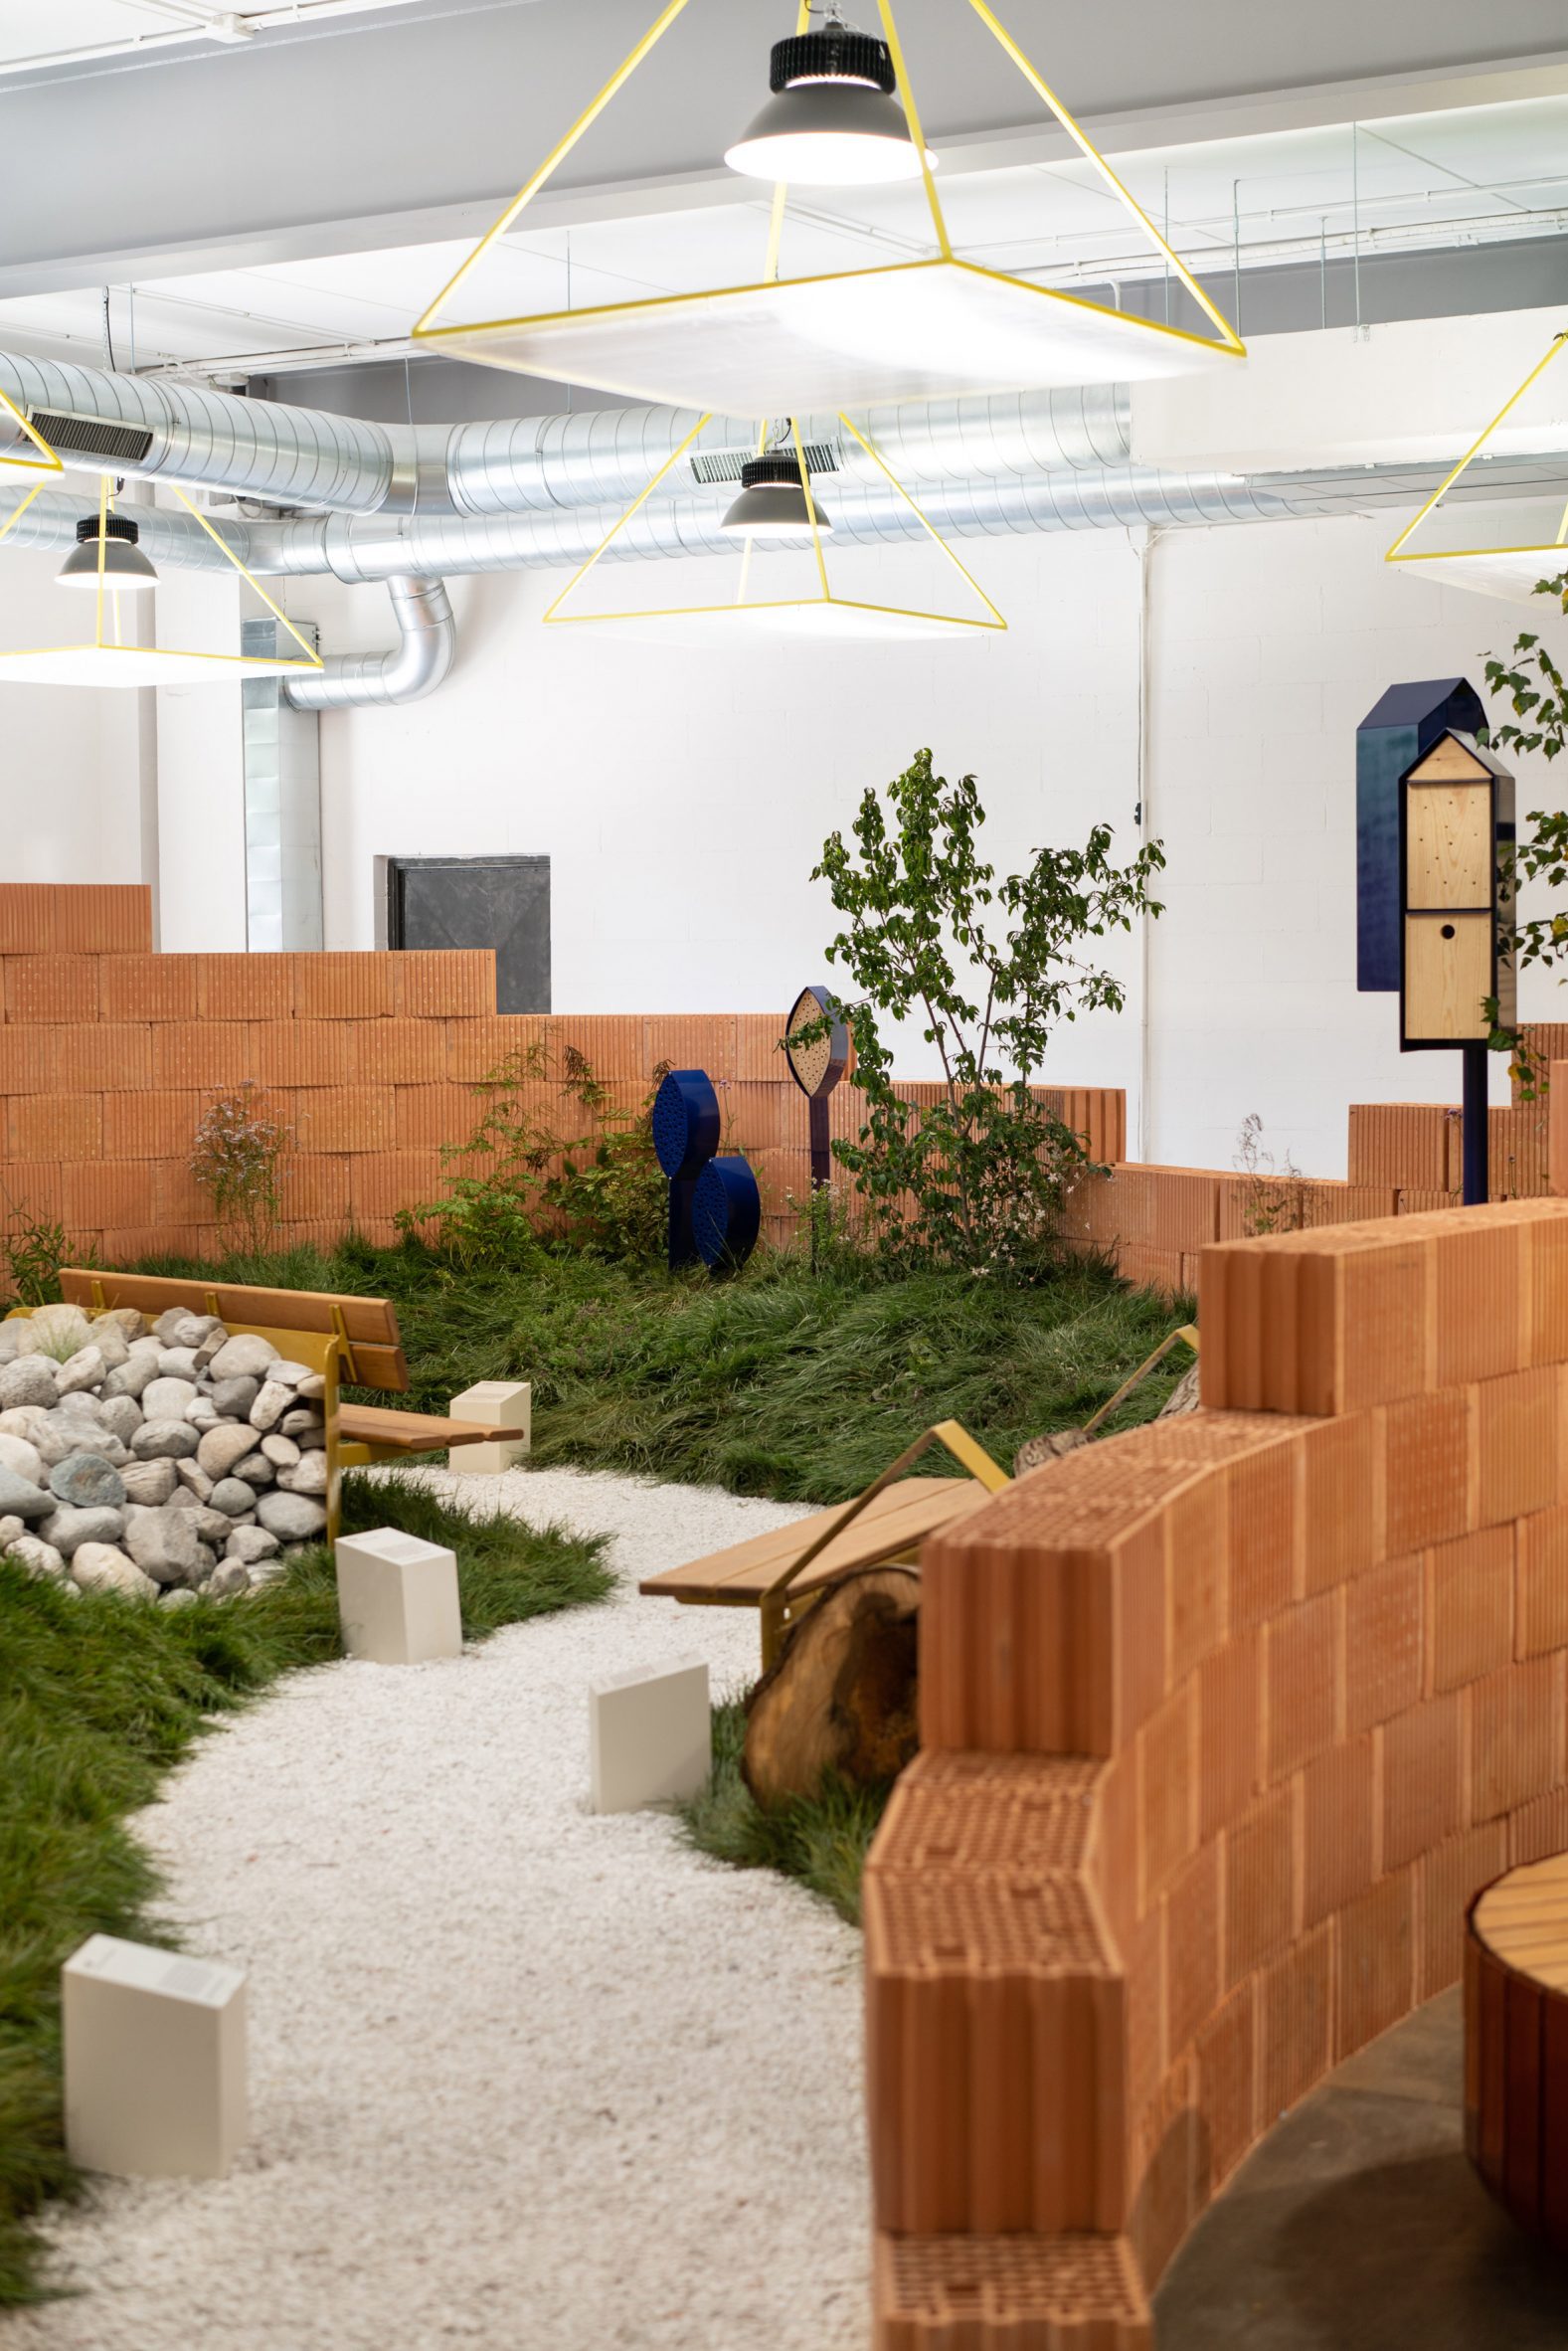 Indoor park installation by Note Design Studio with brick walls and stone floor